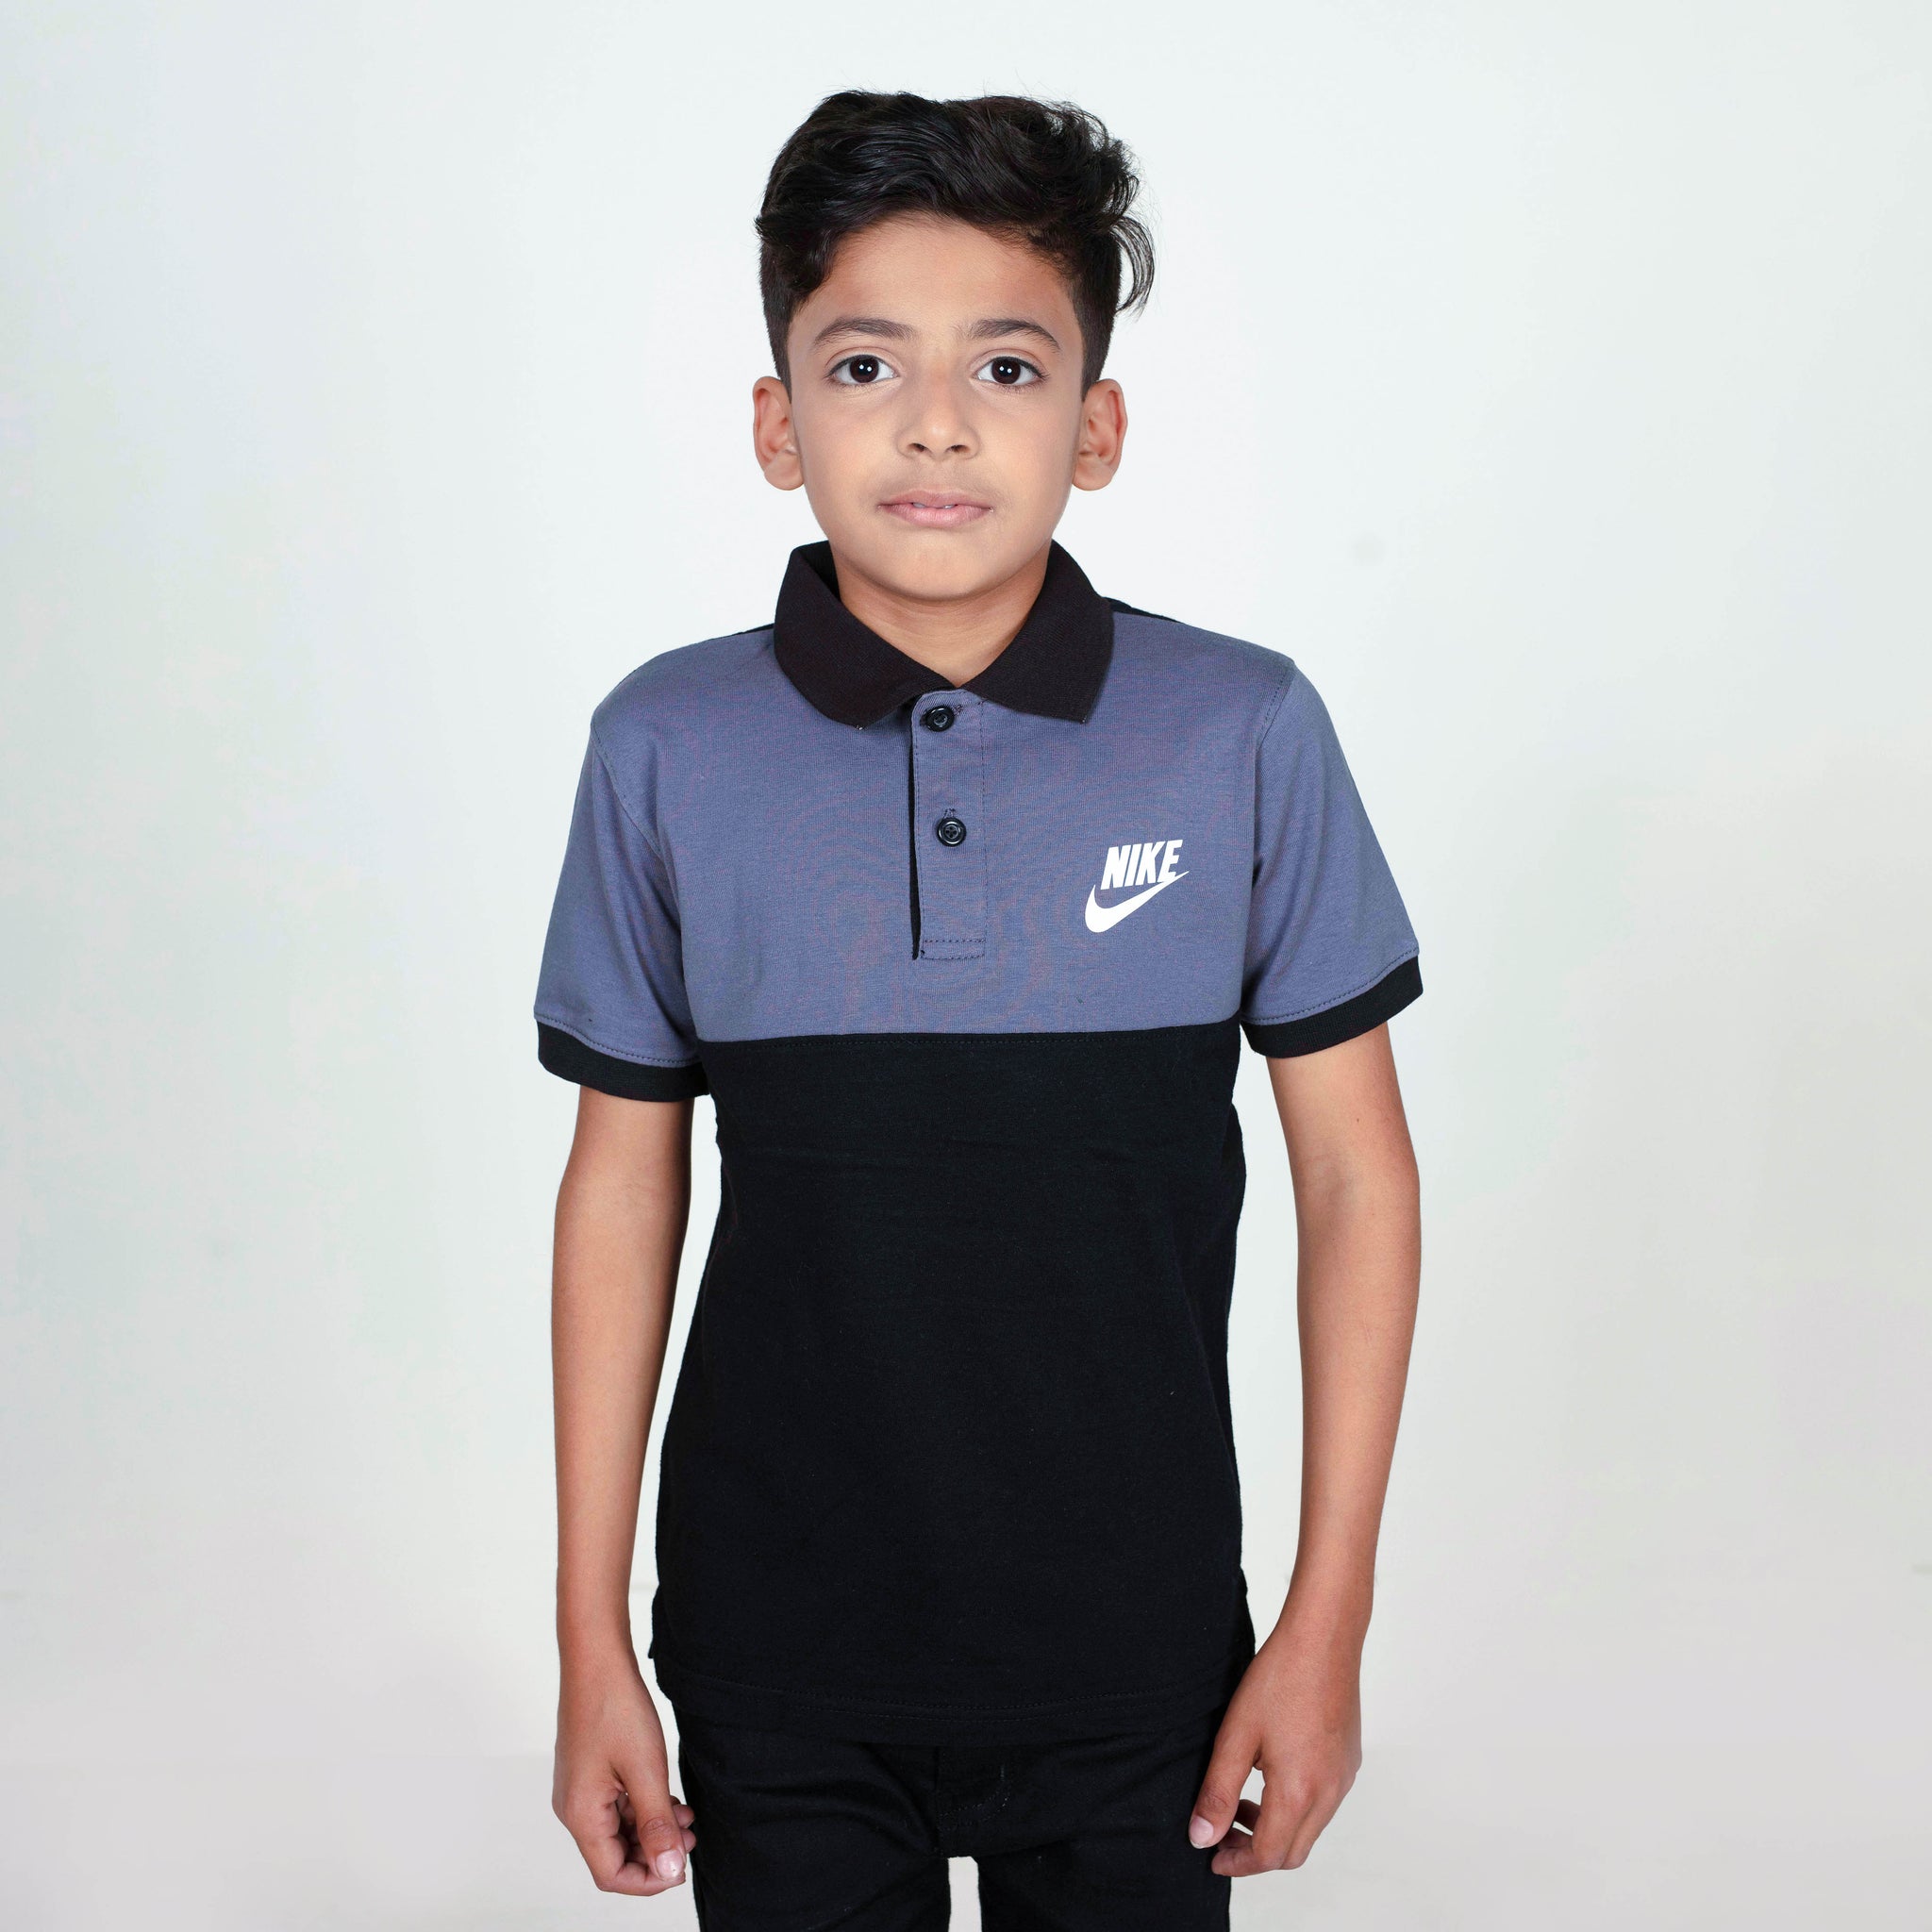 Junior Classic - Cotton Lycra Boys Polo T-Shirt - Grey/Black